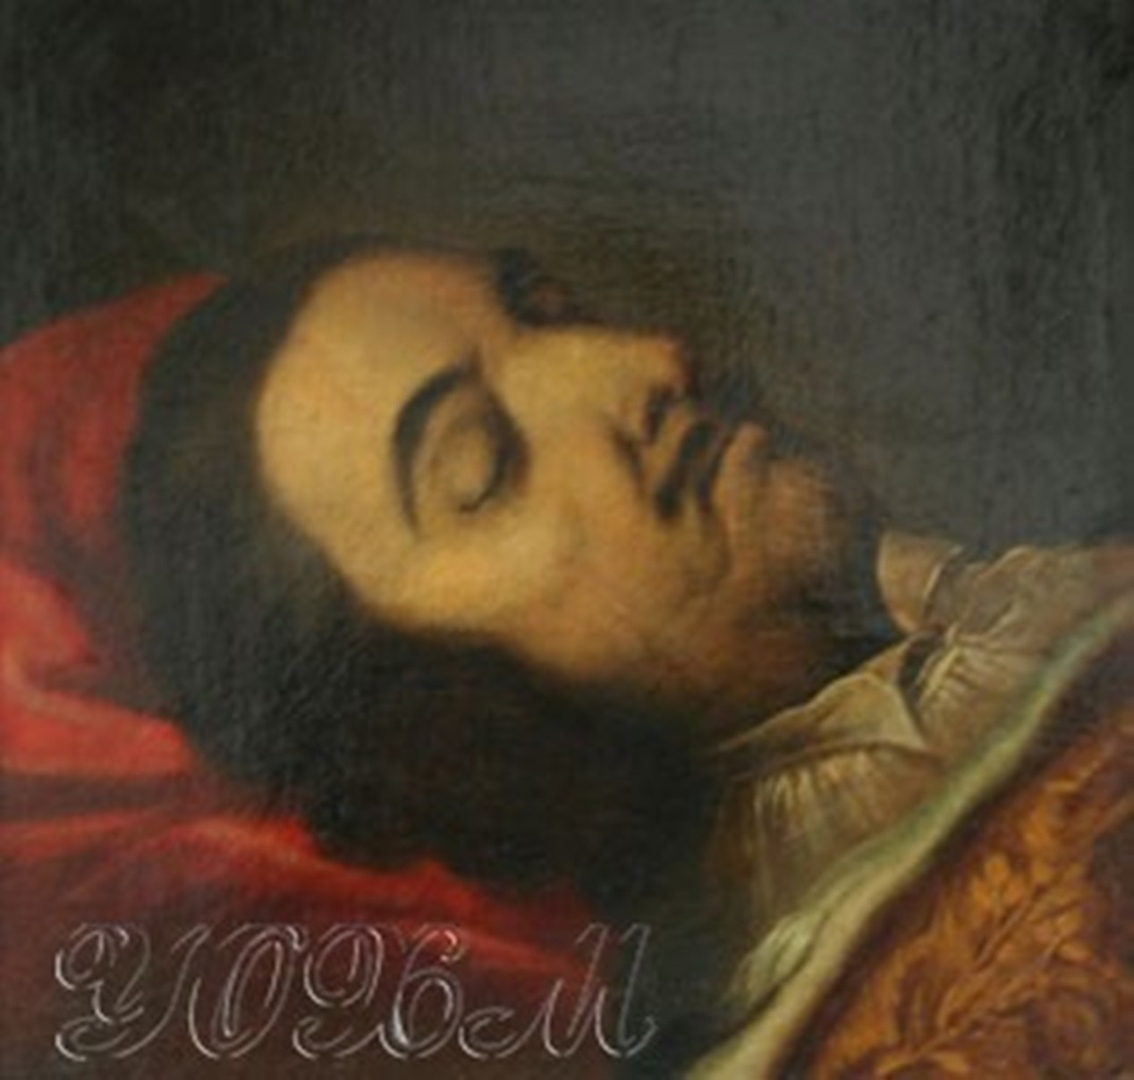 Кончина смерти. Никитин портрет Петра 1 на смертном одре.